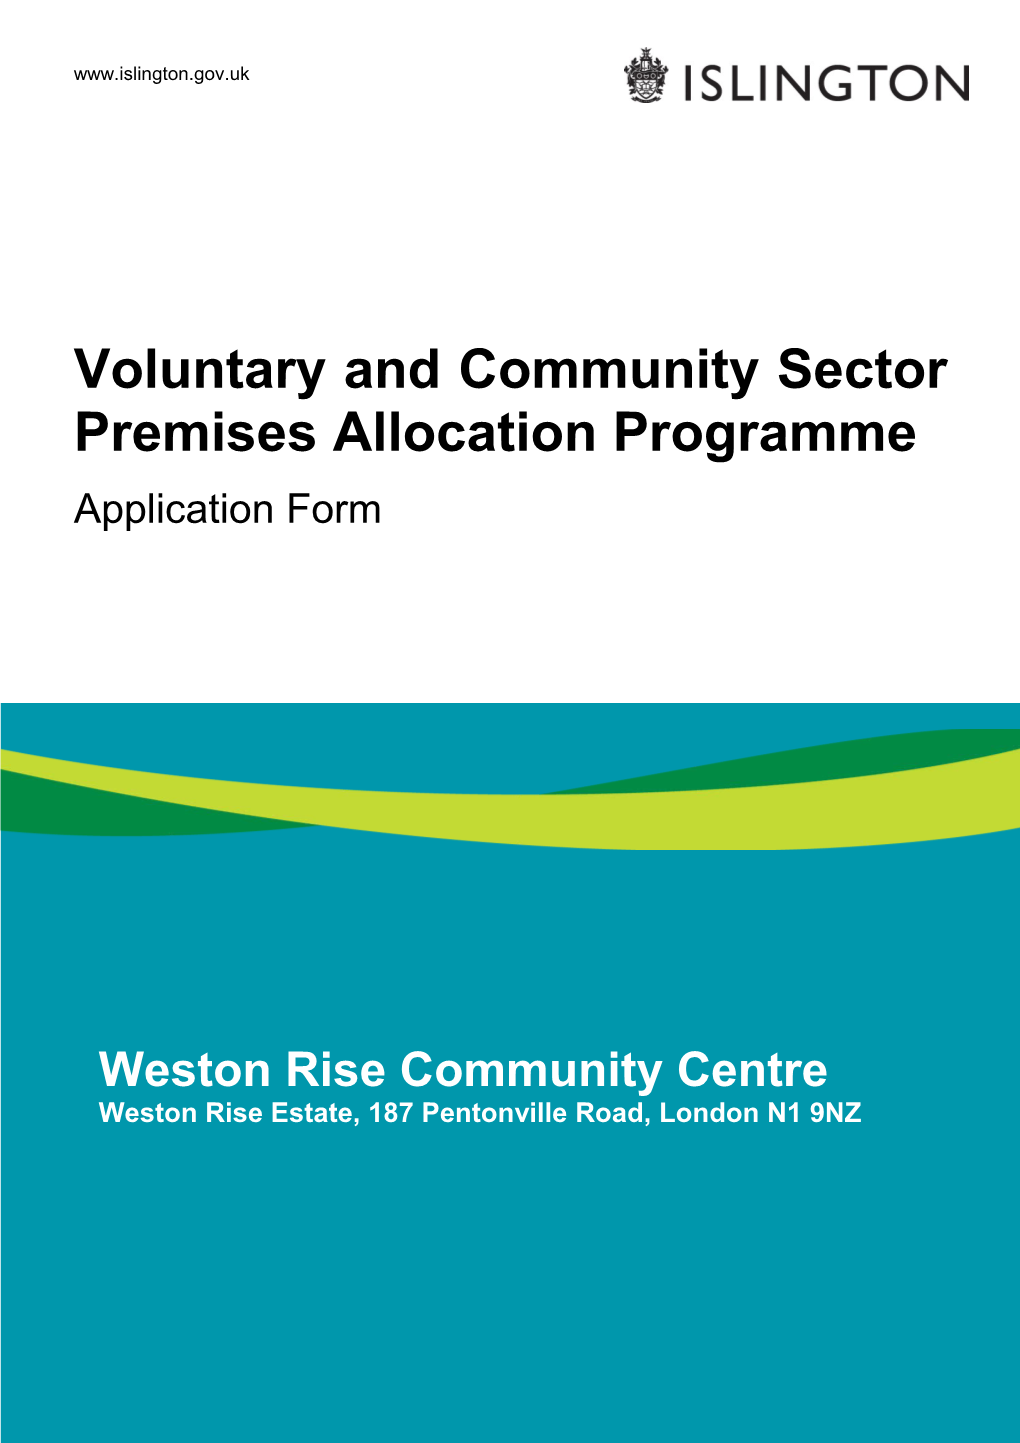 Weston Rise Community Centre - Application Form